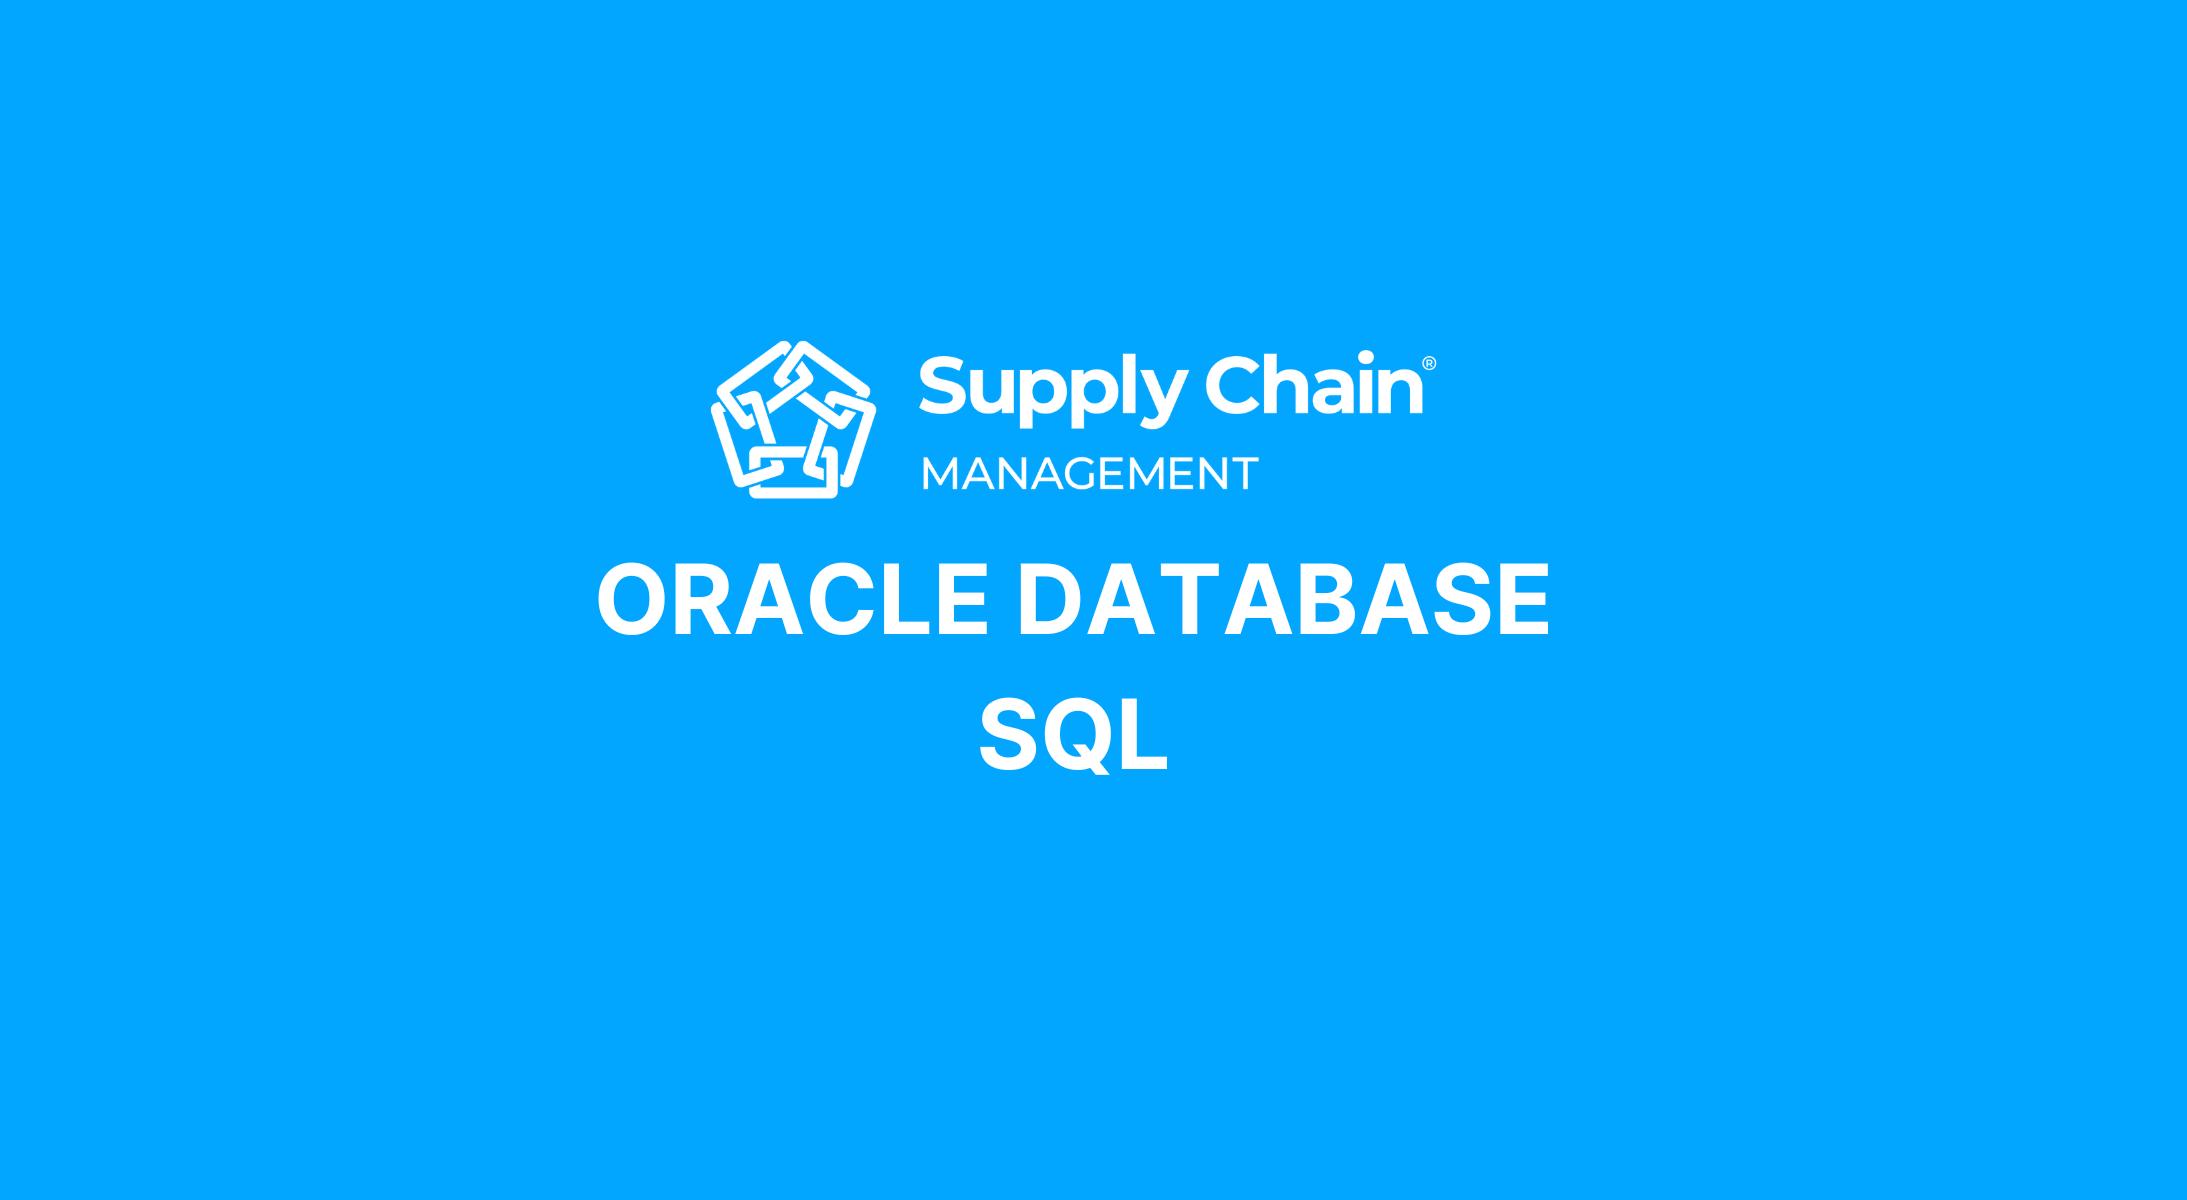 ORACLE DATABASE SQL